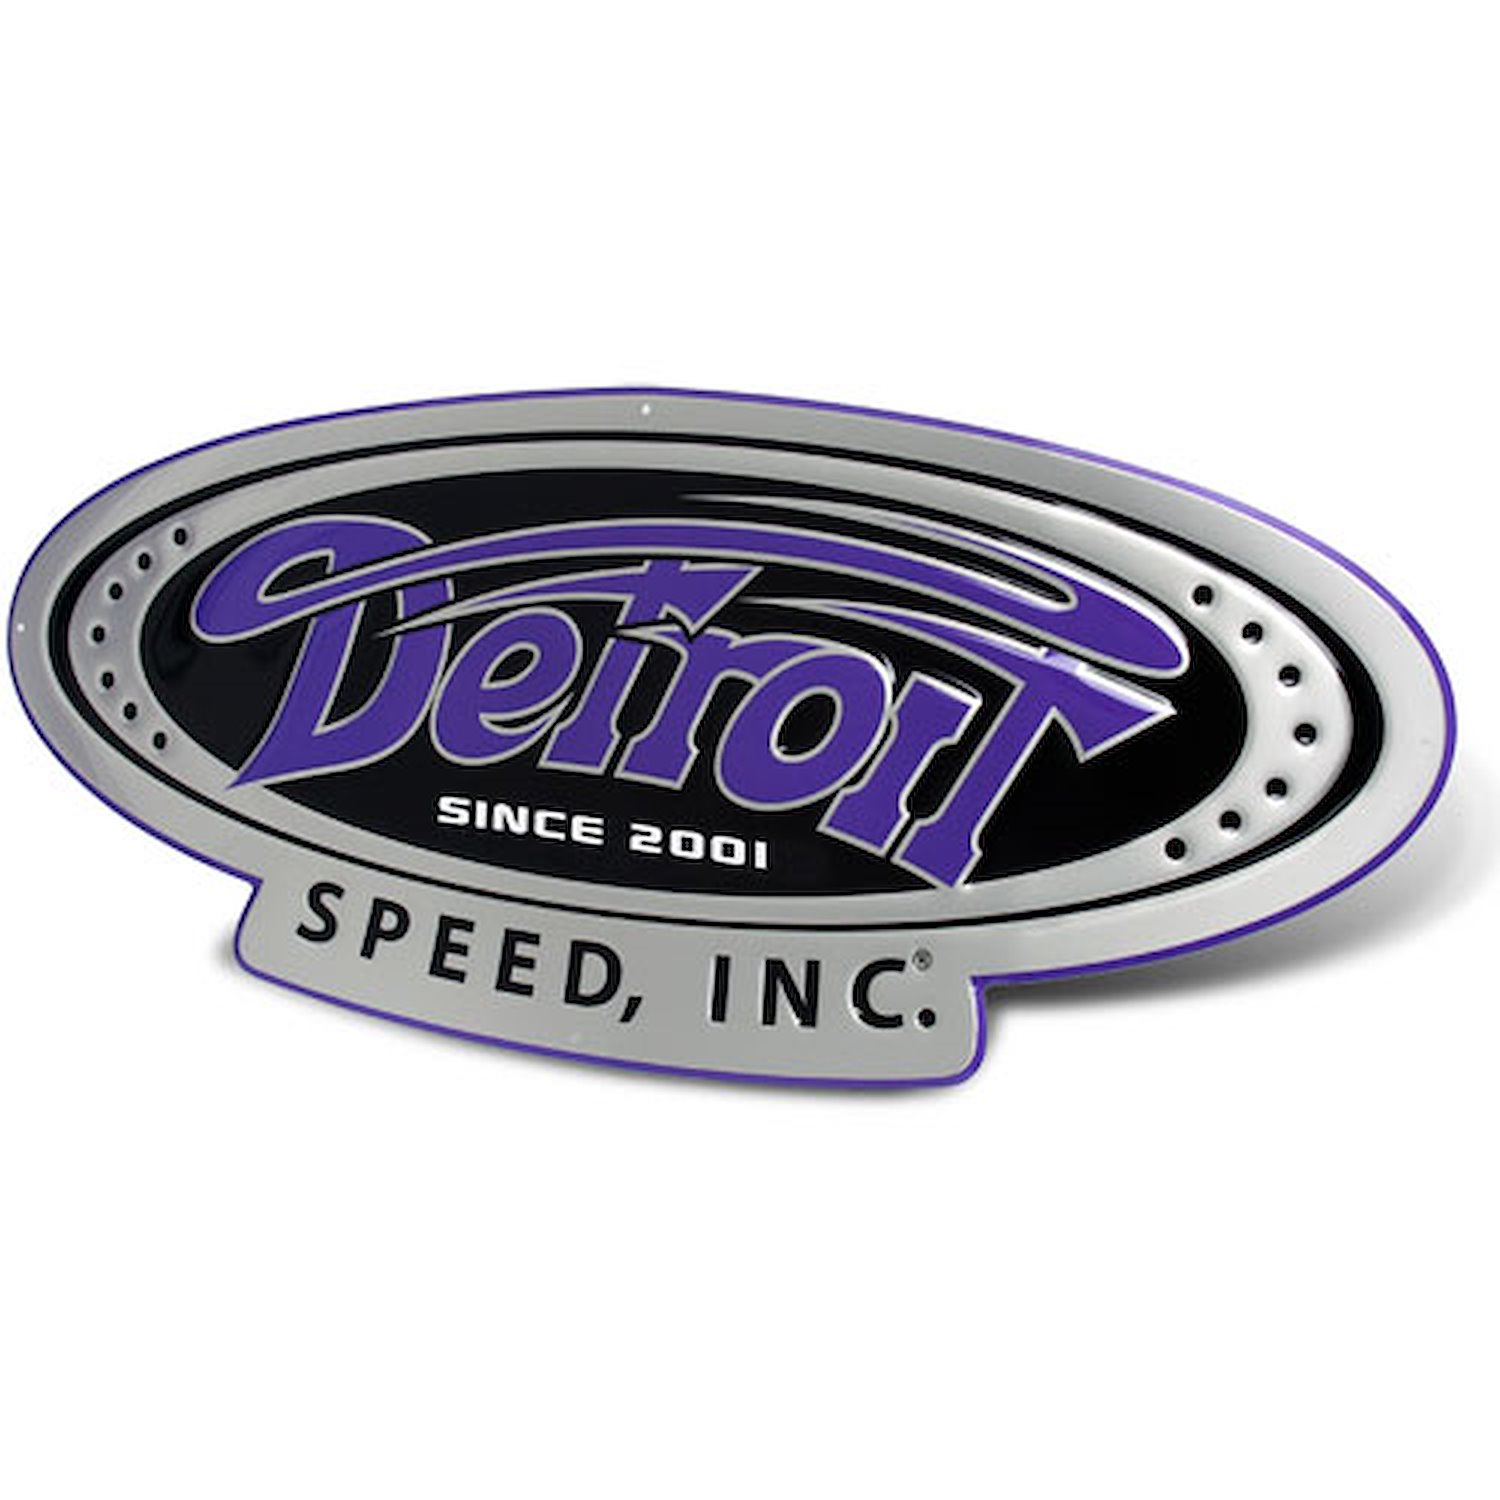 Detroit Speed Inc. Sign